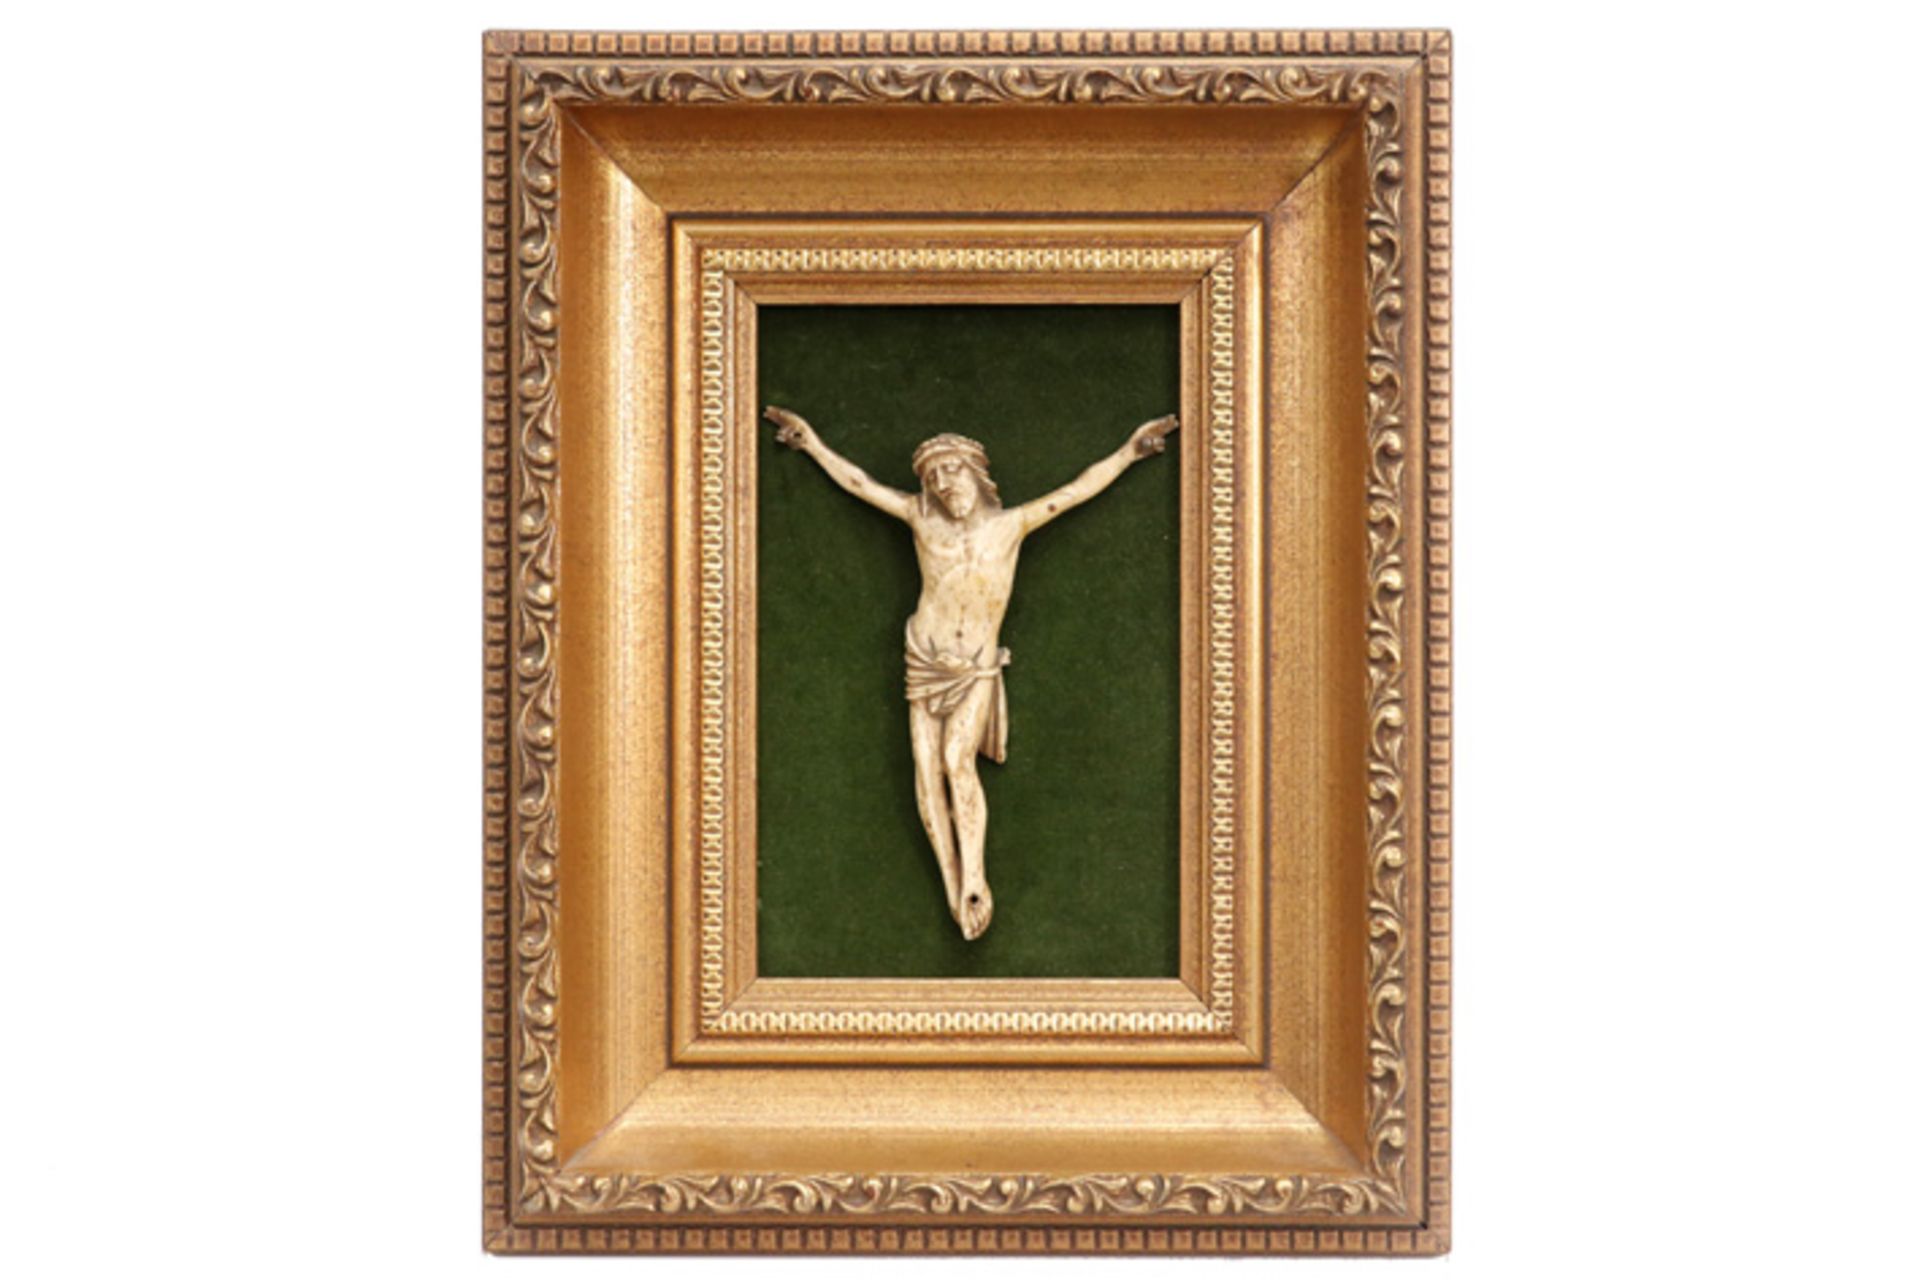 framed antique romanesque style Christ corpus in ivory or bone || Antieke Romaanse Christuscorpus (